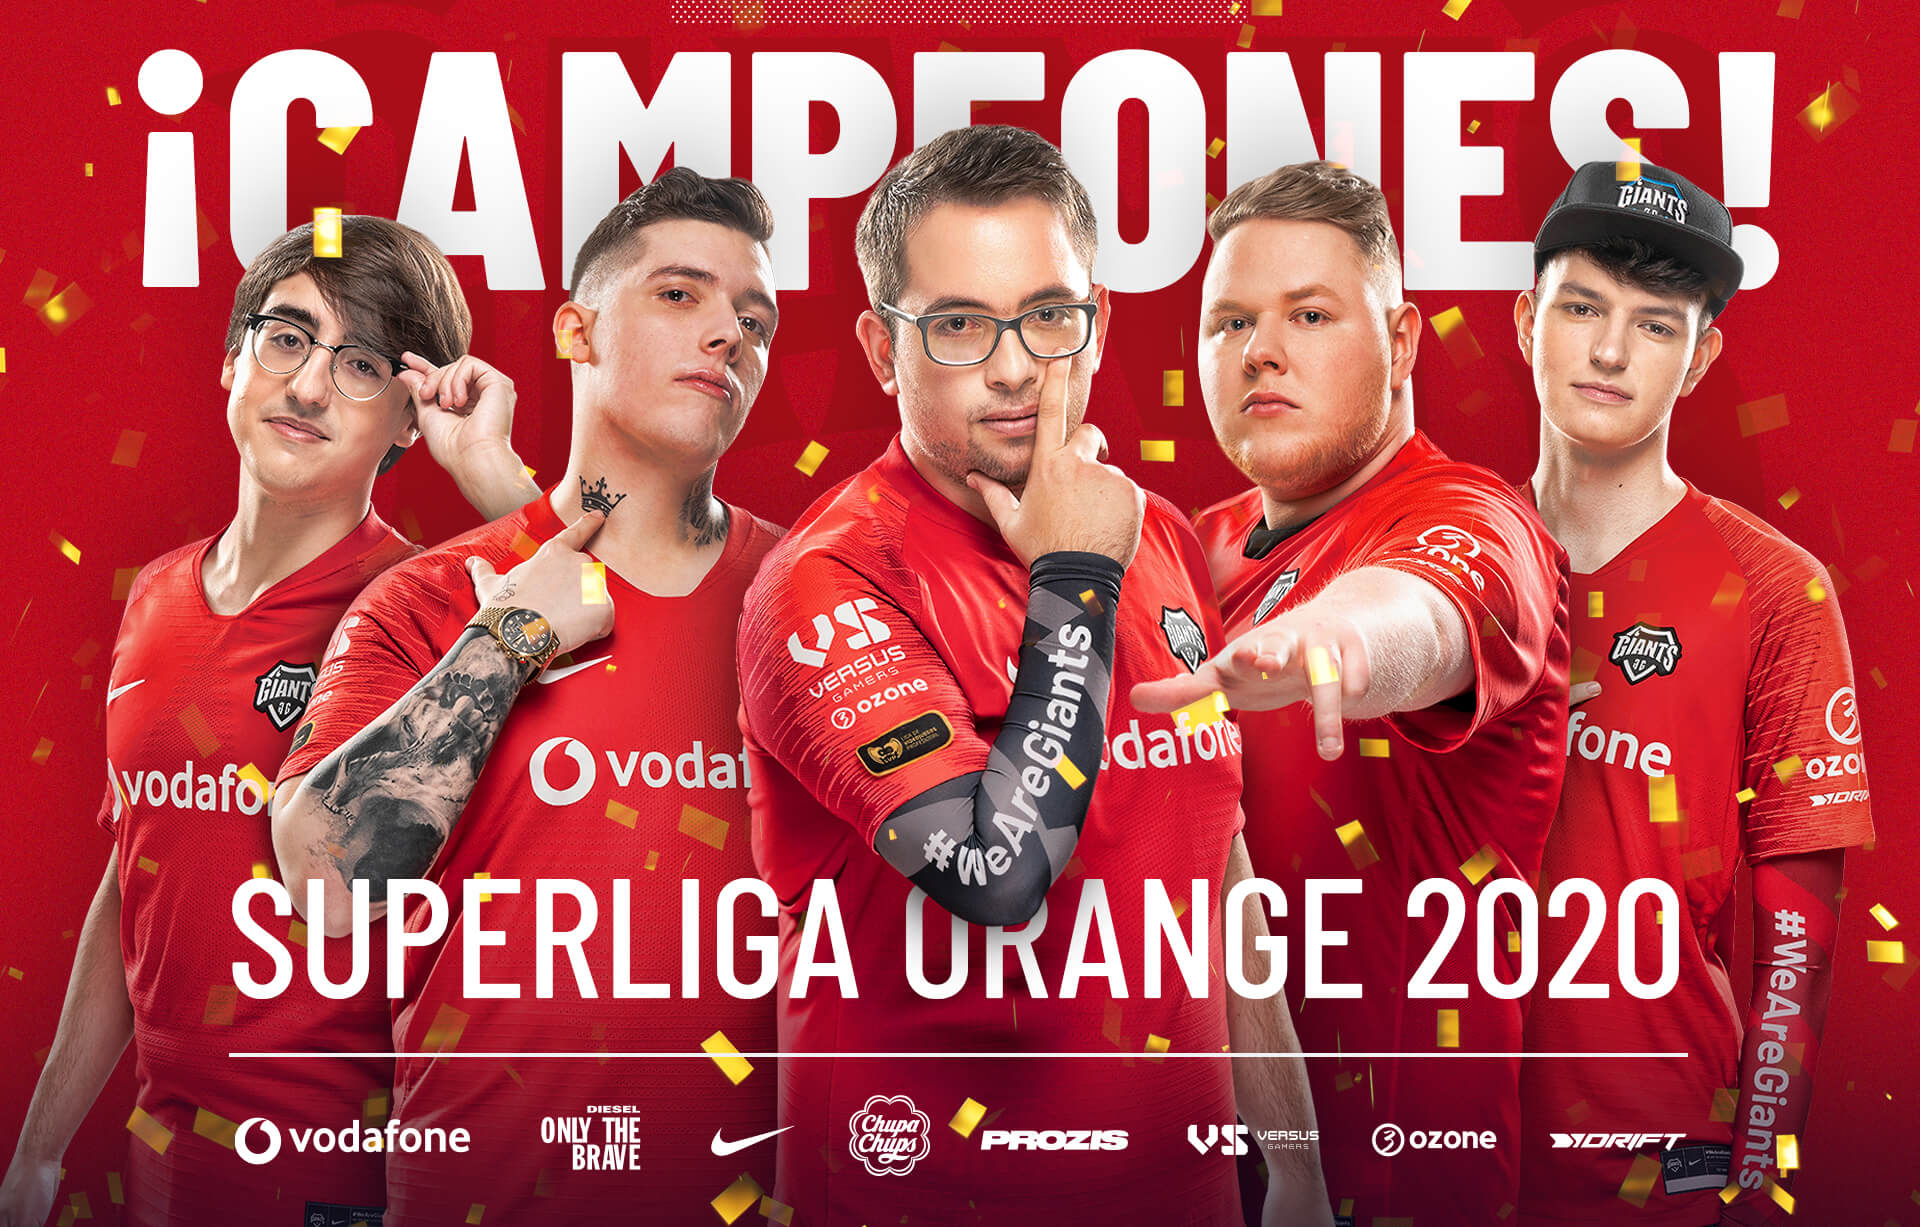 Vodafone Giants campeones superliga